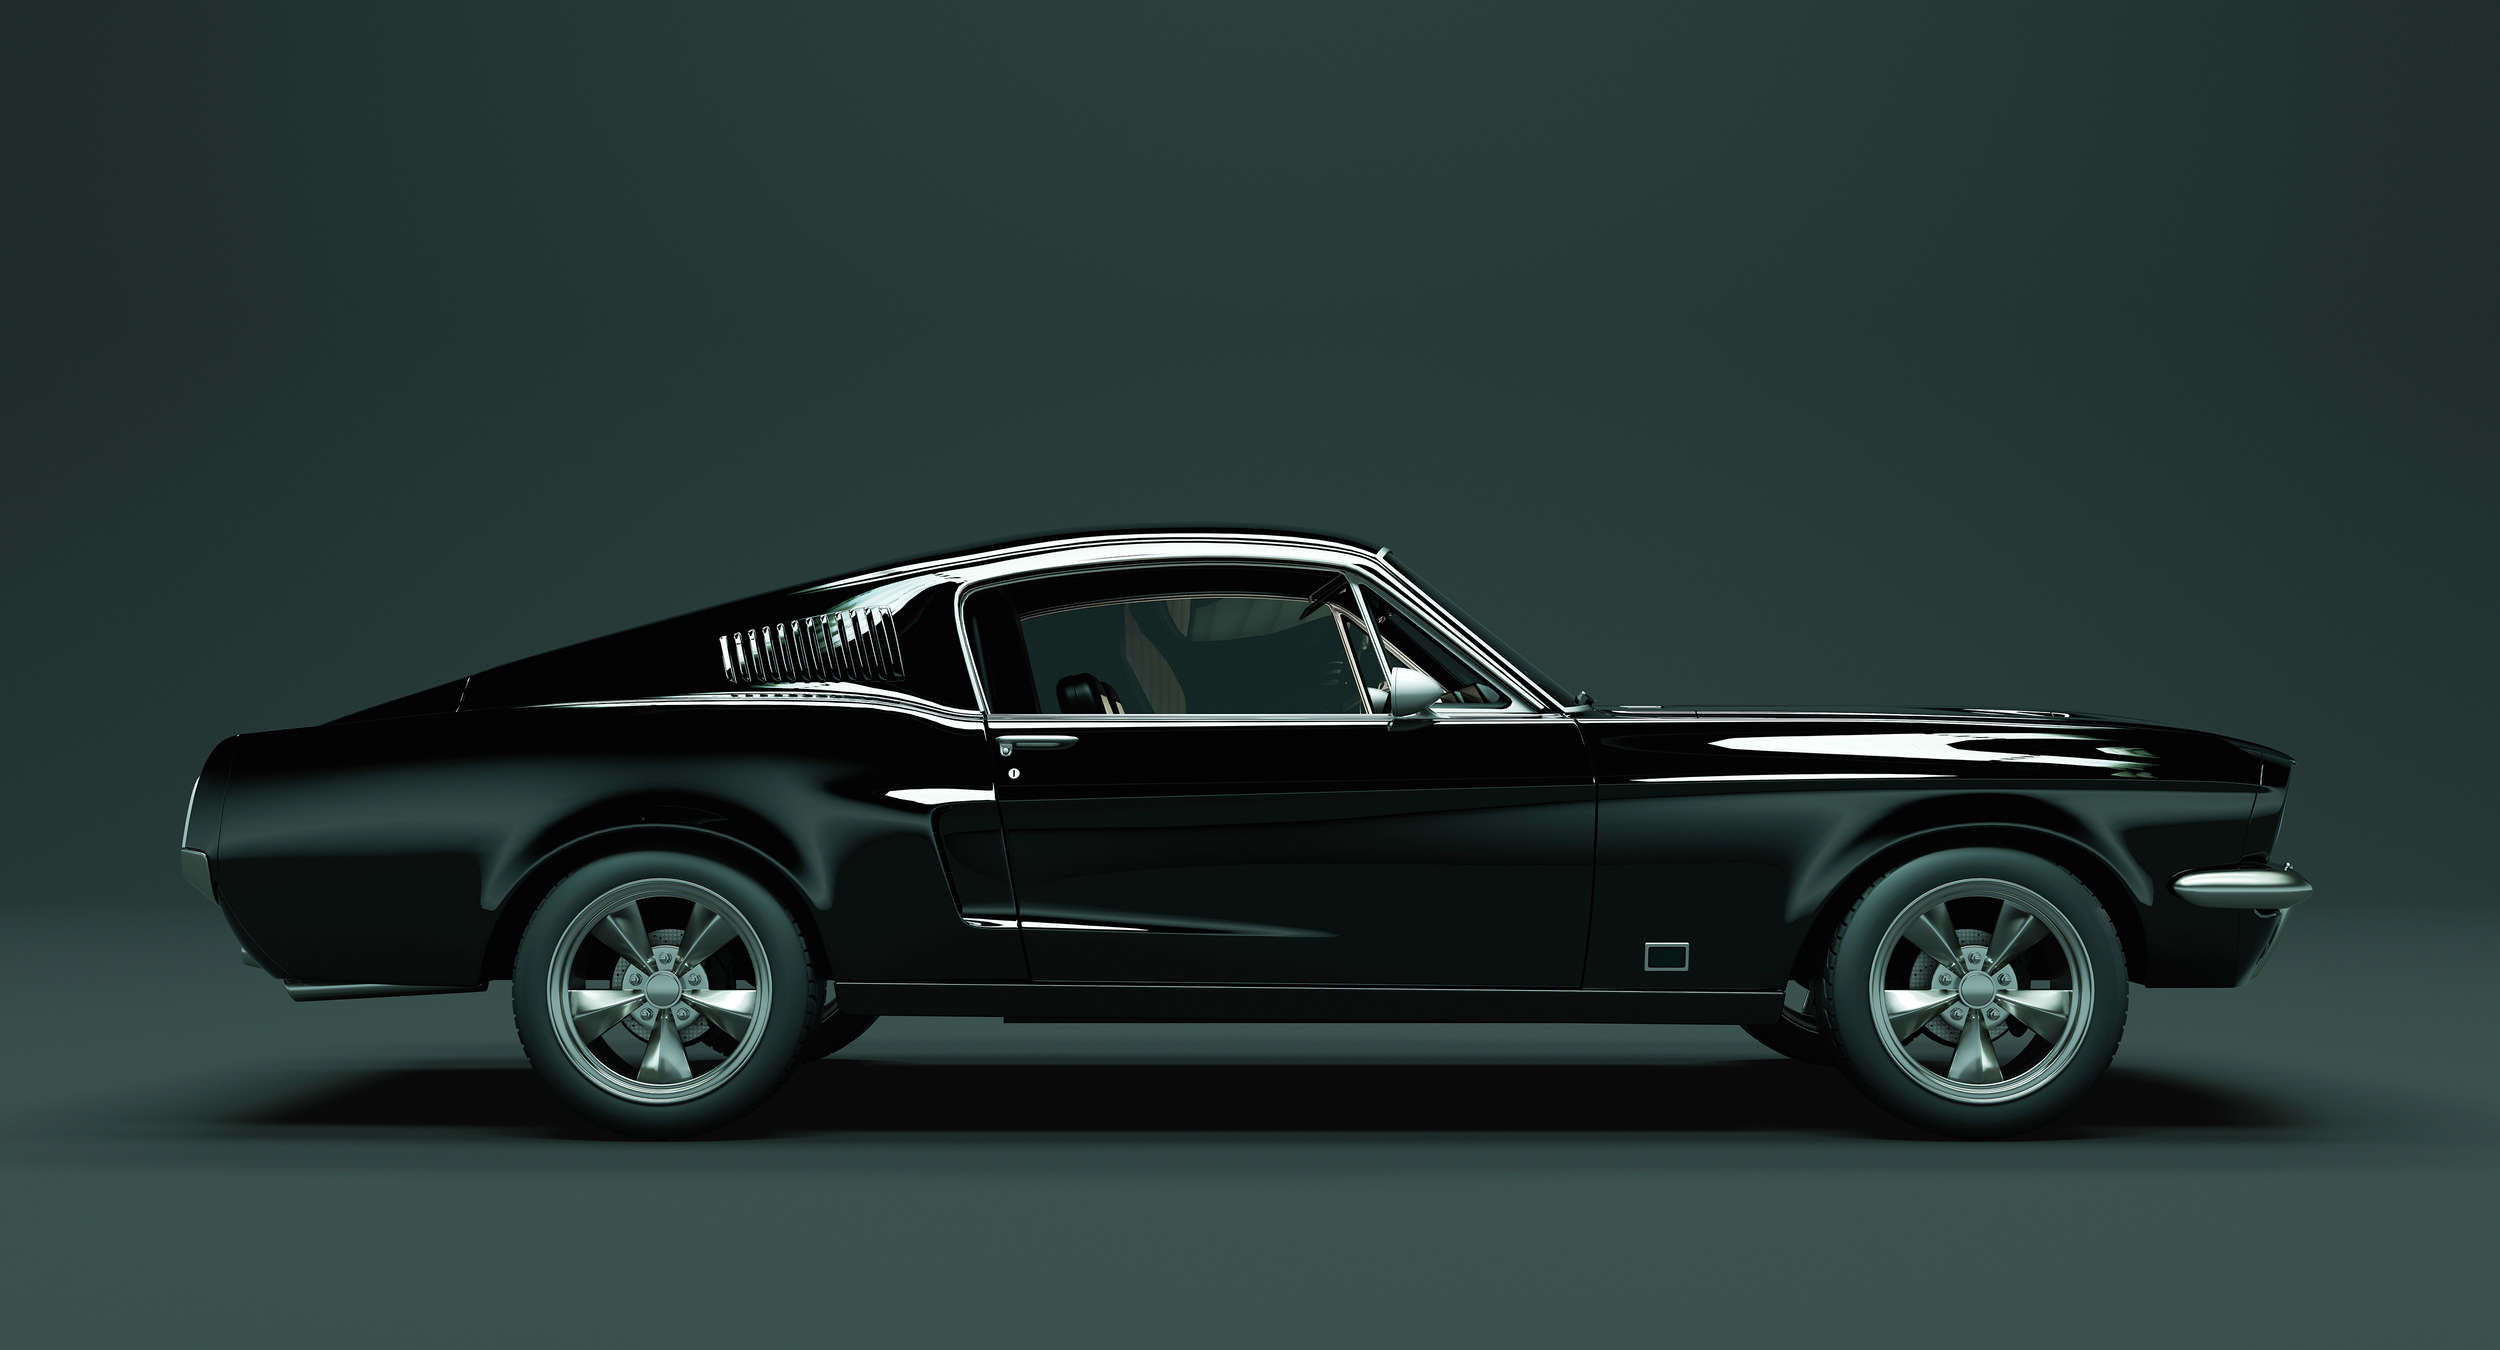             Mustang 1 - Photo wallpaper, Mustang side view, Vintage - Blue, Black | Matt smooth fleece
        